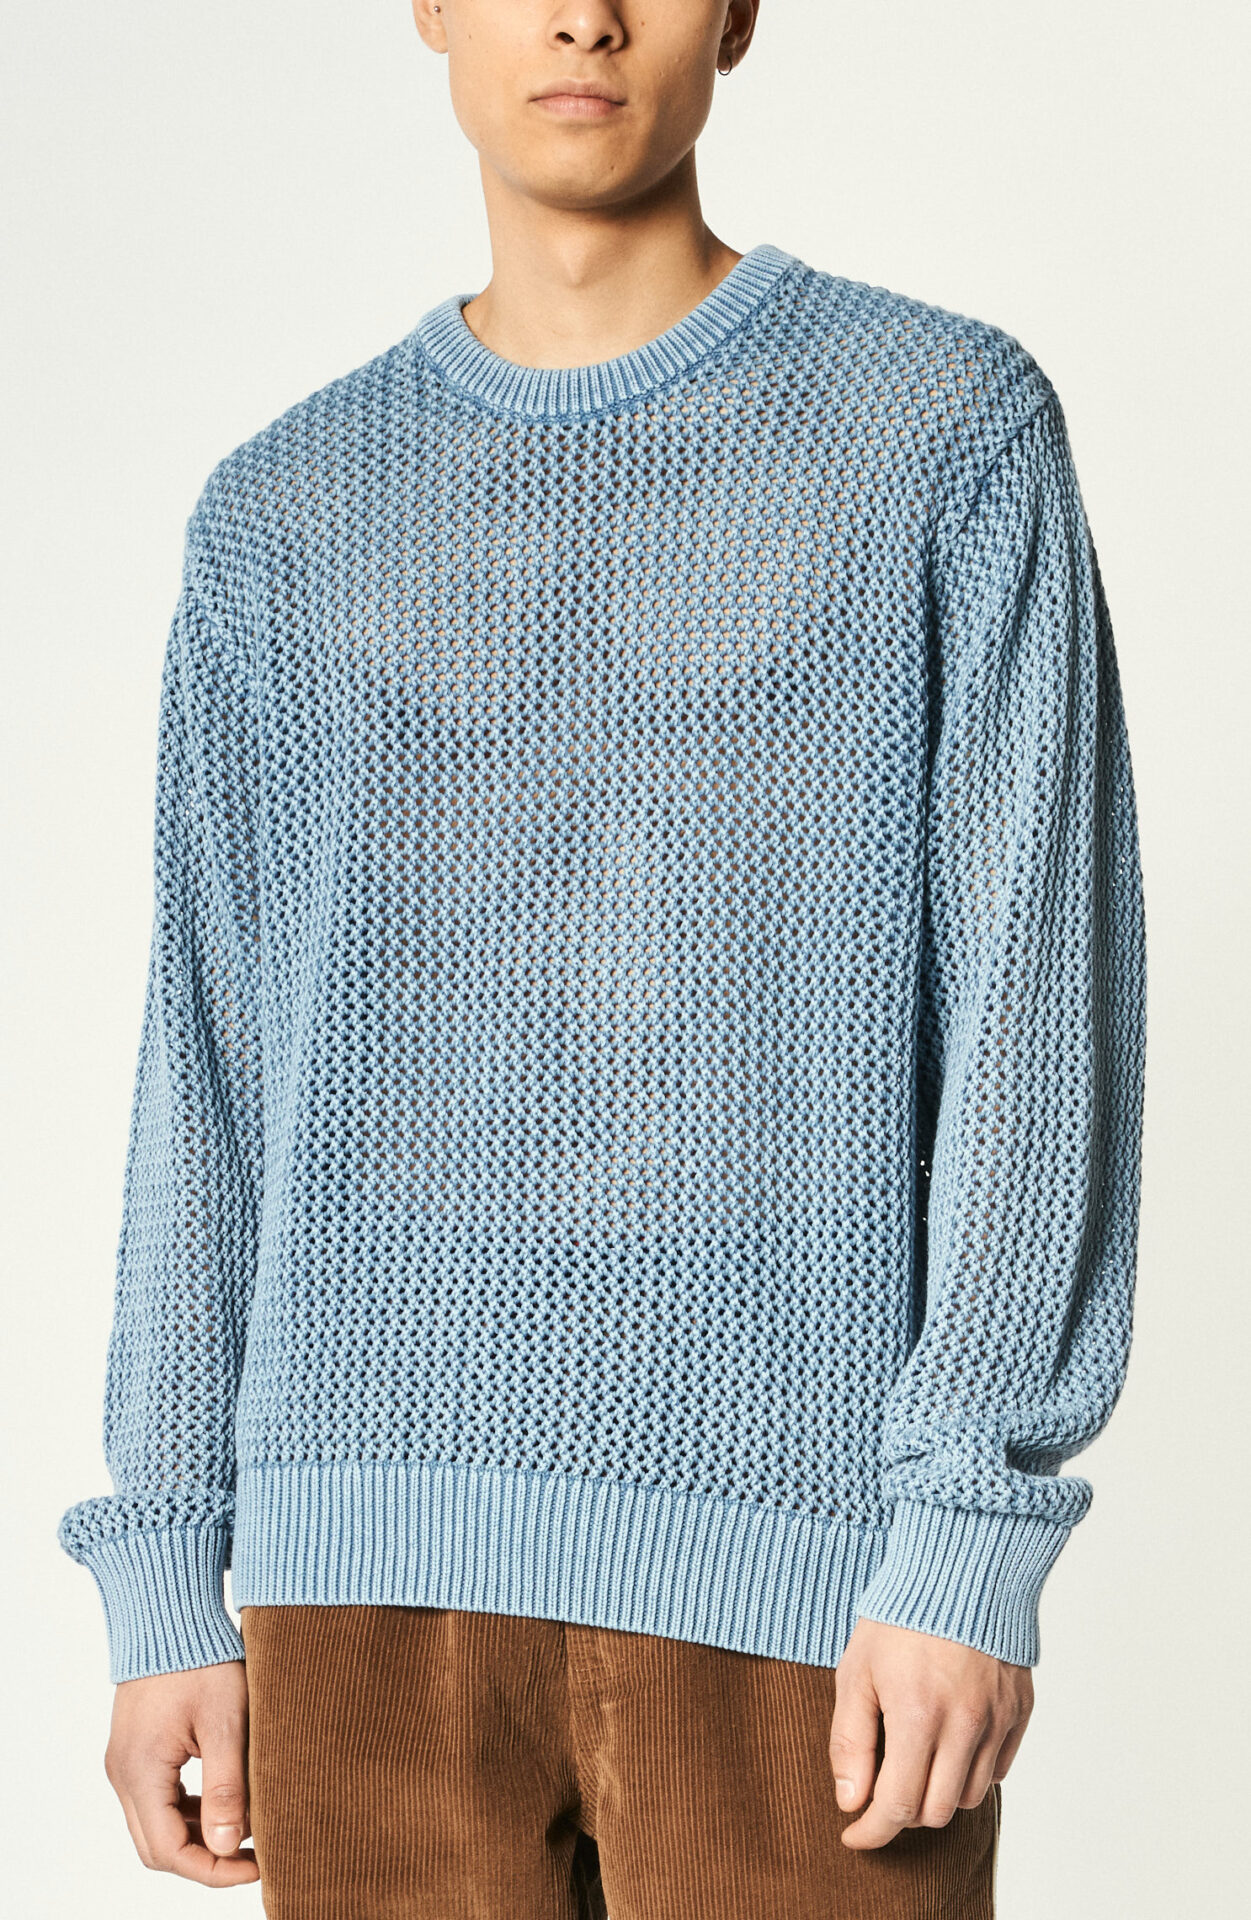 Stüssy - Blue knit sweater - Schwittenberg